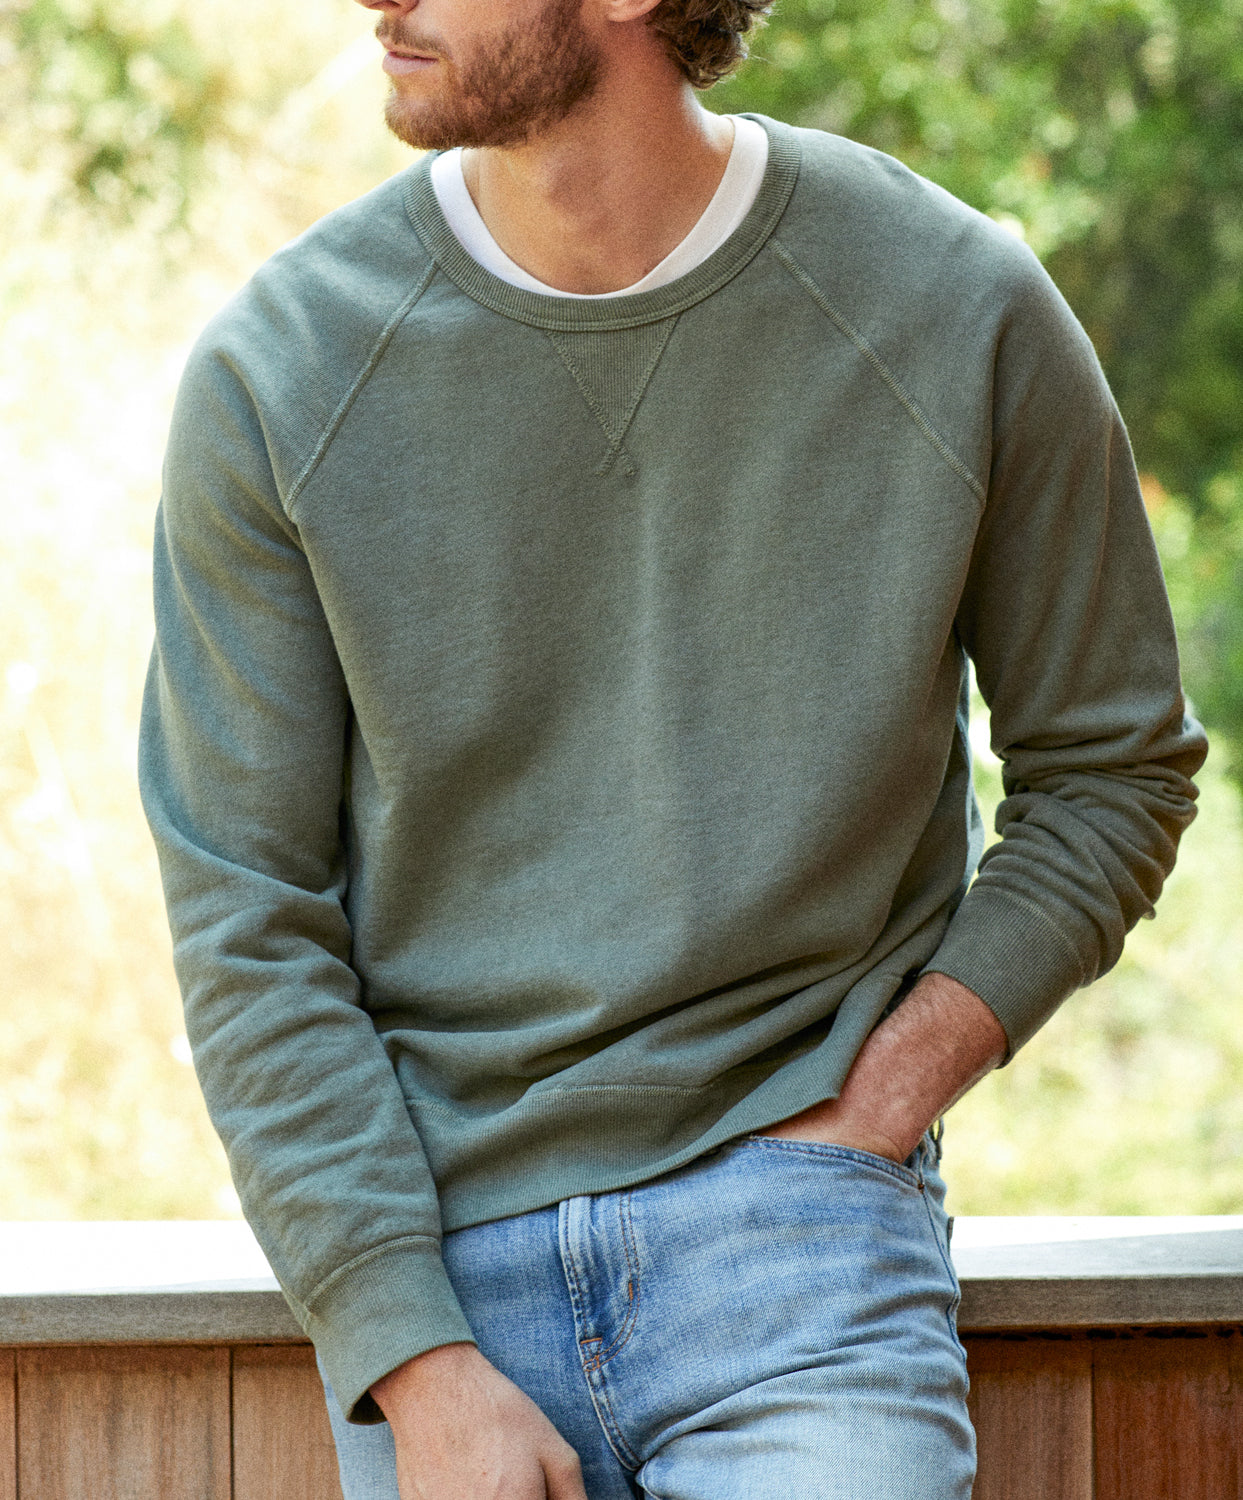 California Sweatshirt, Men's Sweatshirts